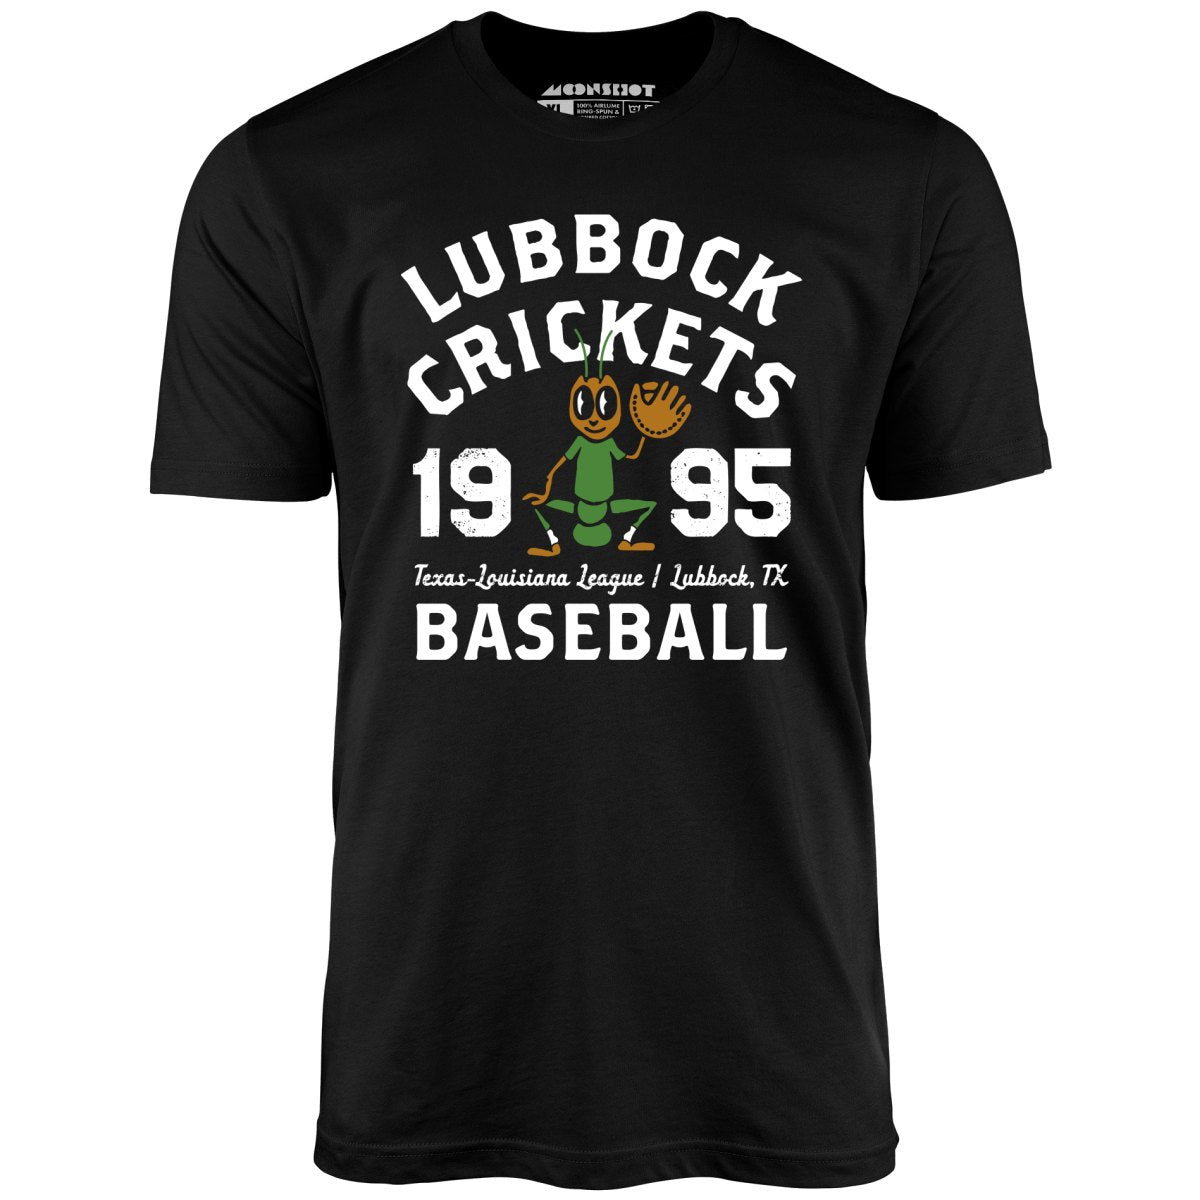 Lubbock Crickets - Texas - Vintage Defunct Baseball Teams - Unisex T-Shirt